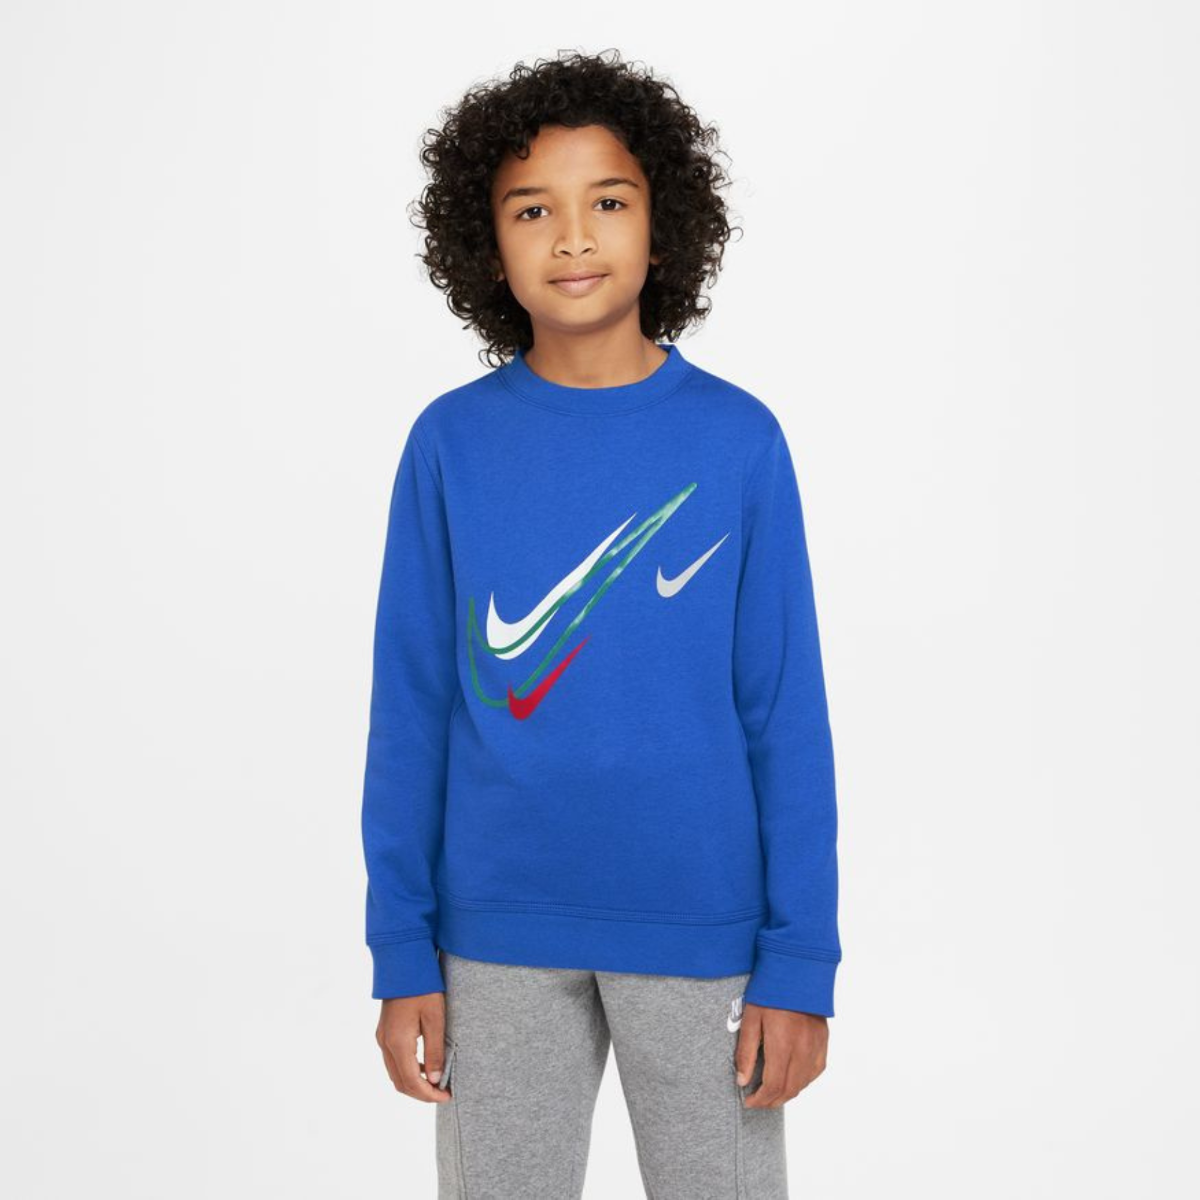 Nike Tech Fleece Junior Sweatshirt - Blue/White/Red